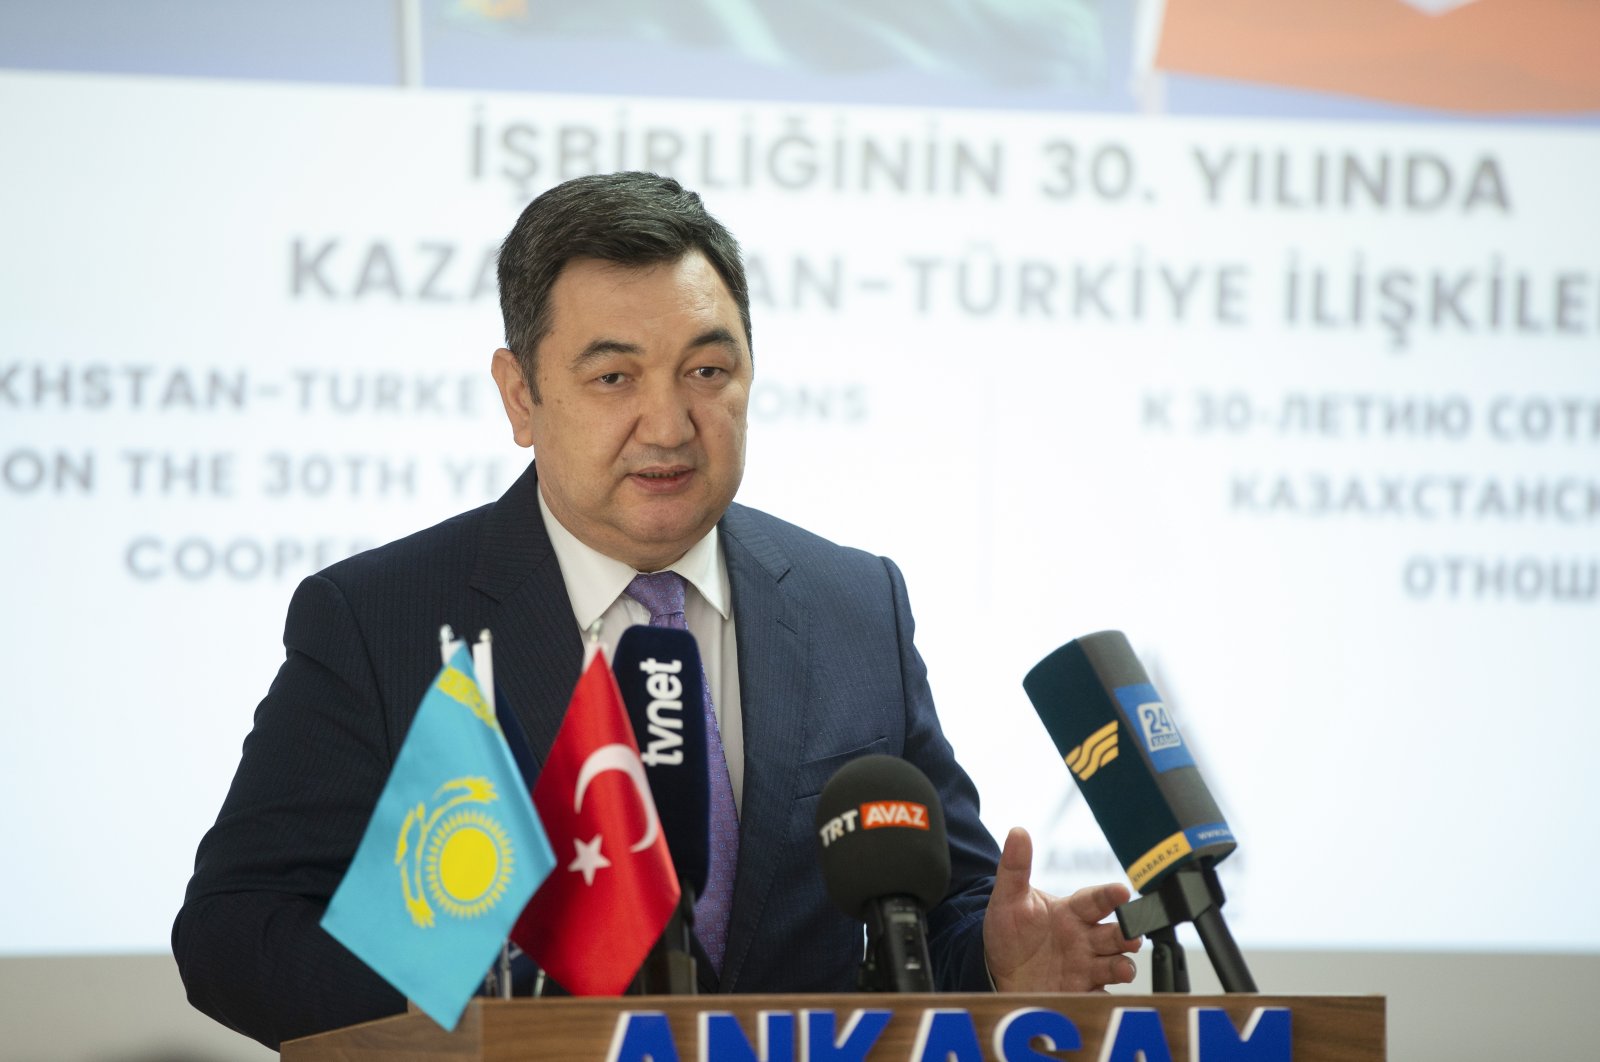 Darkhan Kydyrali, the president of the International Turkic Academy in Kazakhstan, speaks at a panel organized by ANKASAM in Ankara, April 27, 2022. (AA Photo)